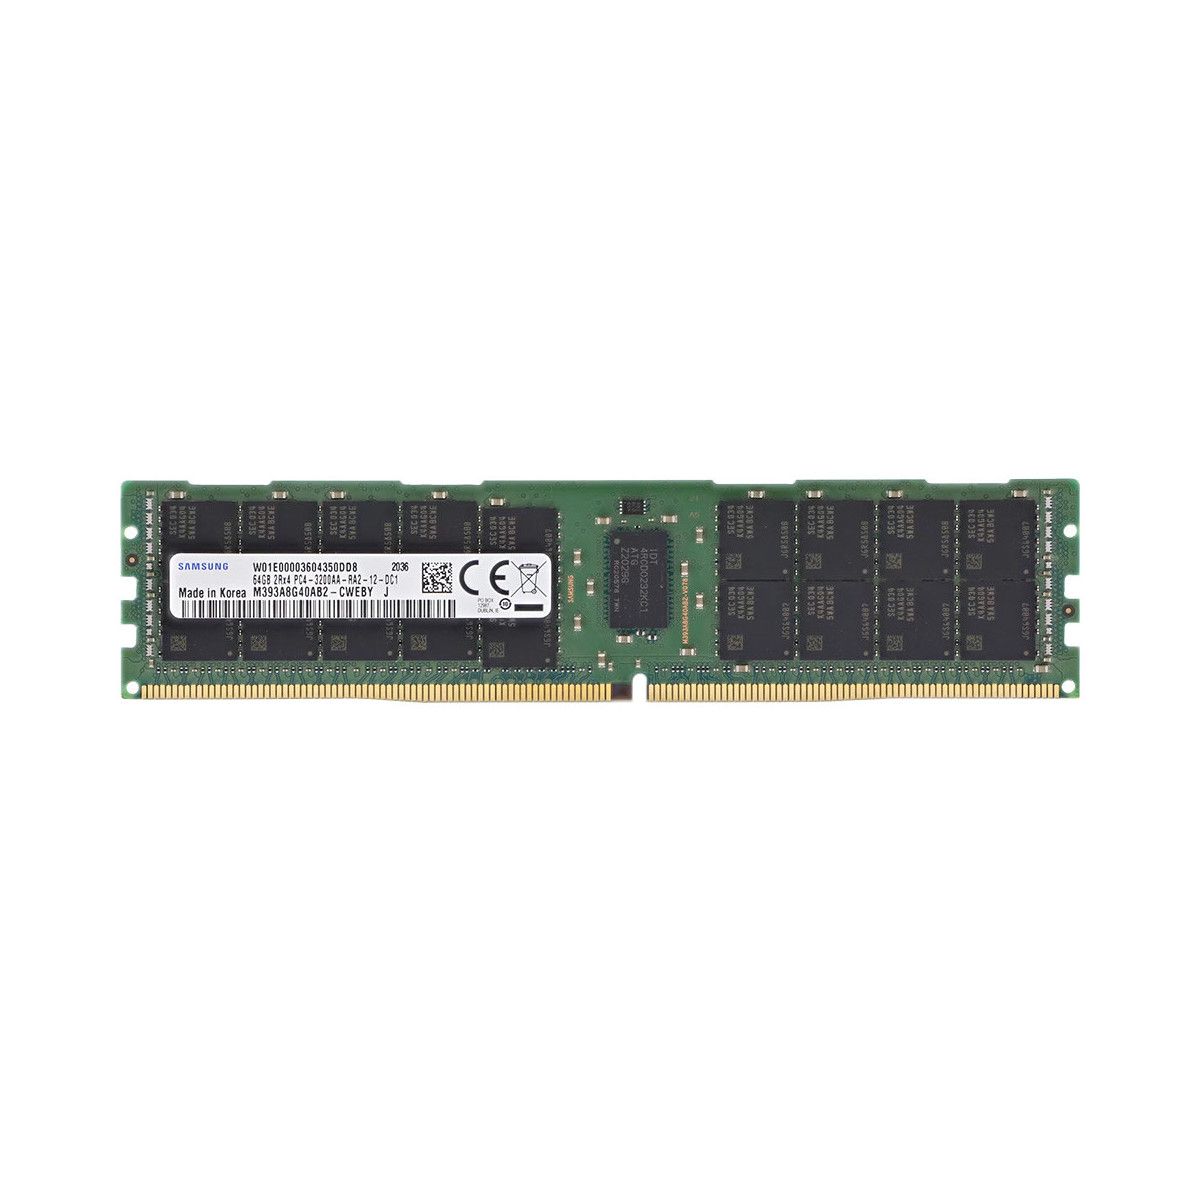 P06035-B21-MS - Memstar 1x 64GB DDR4-3200 RDIMM PC4-25600R - Memstar Kompatybilna pamięć OEM 1 - Memstar 